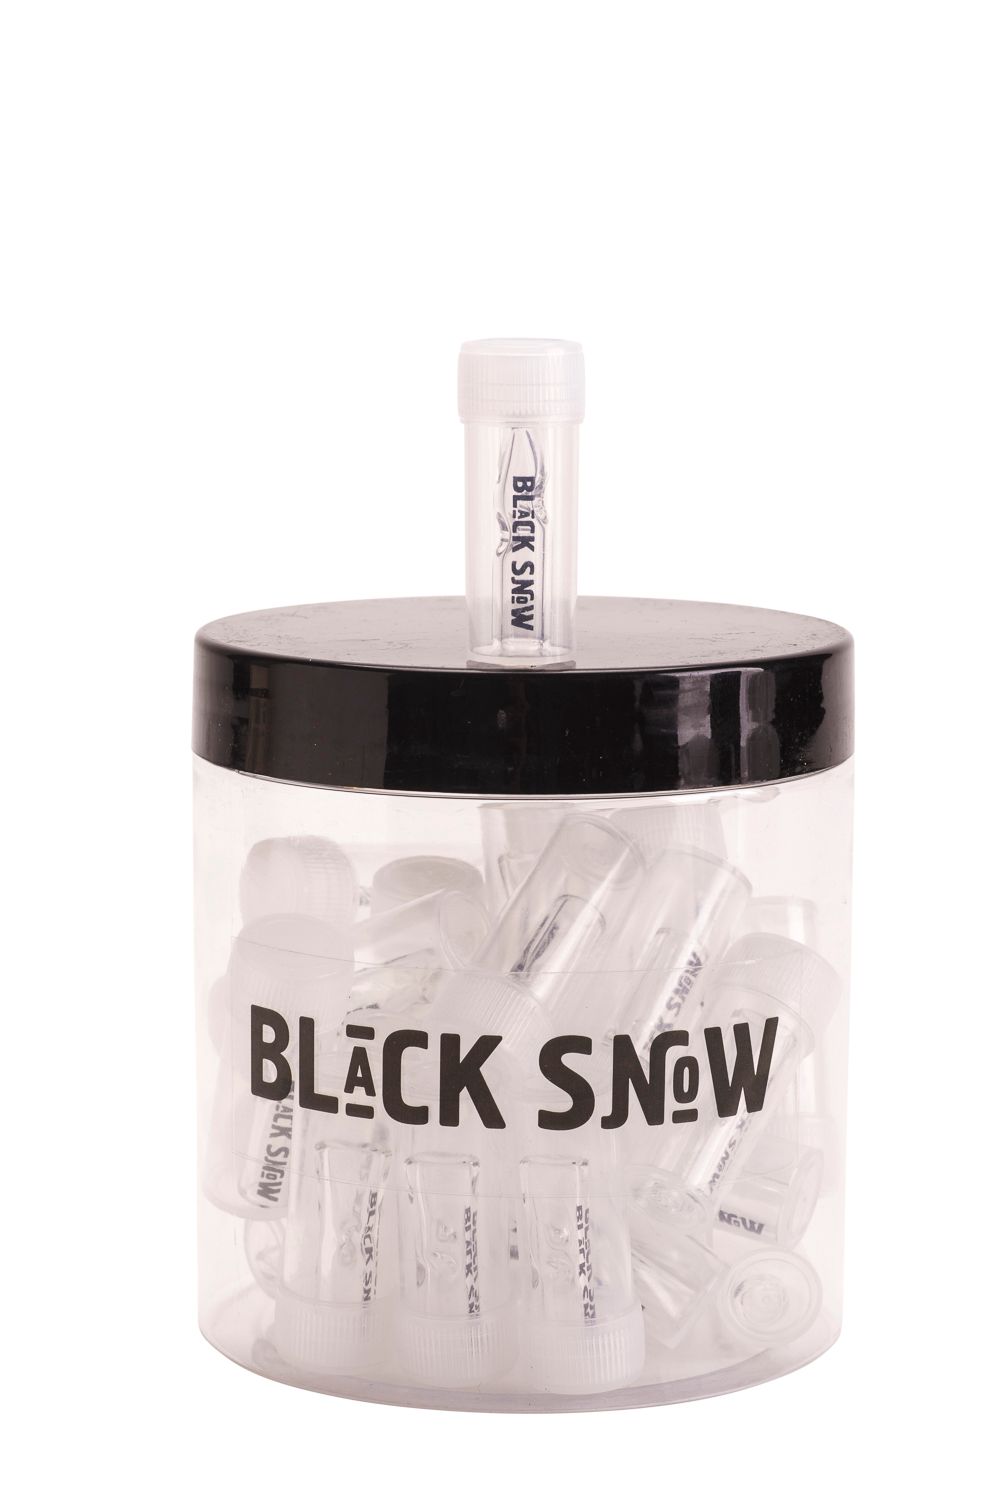 פילטר זכוכית BLACK SNOW